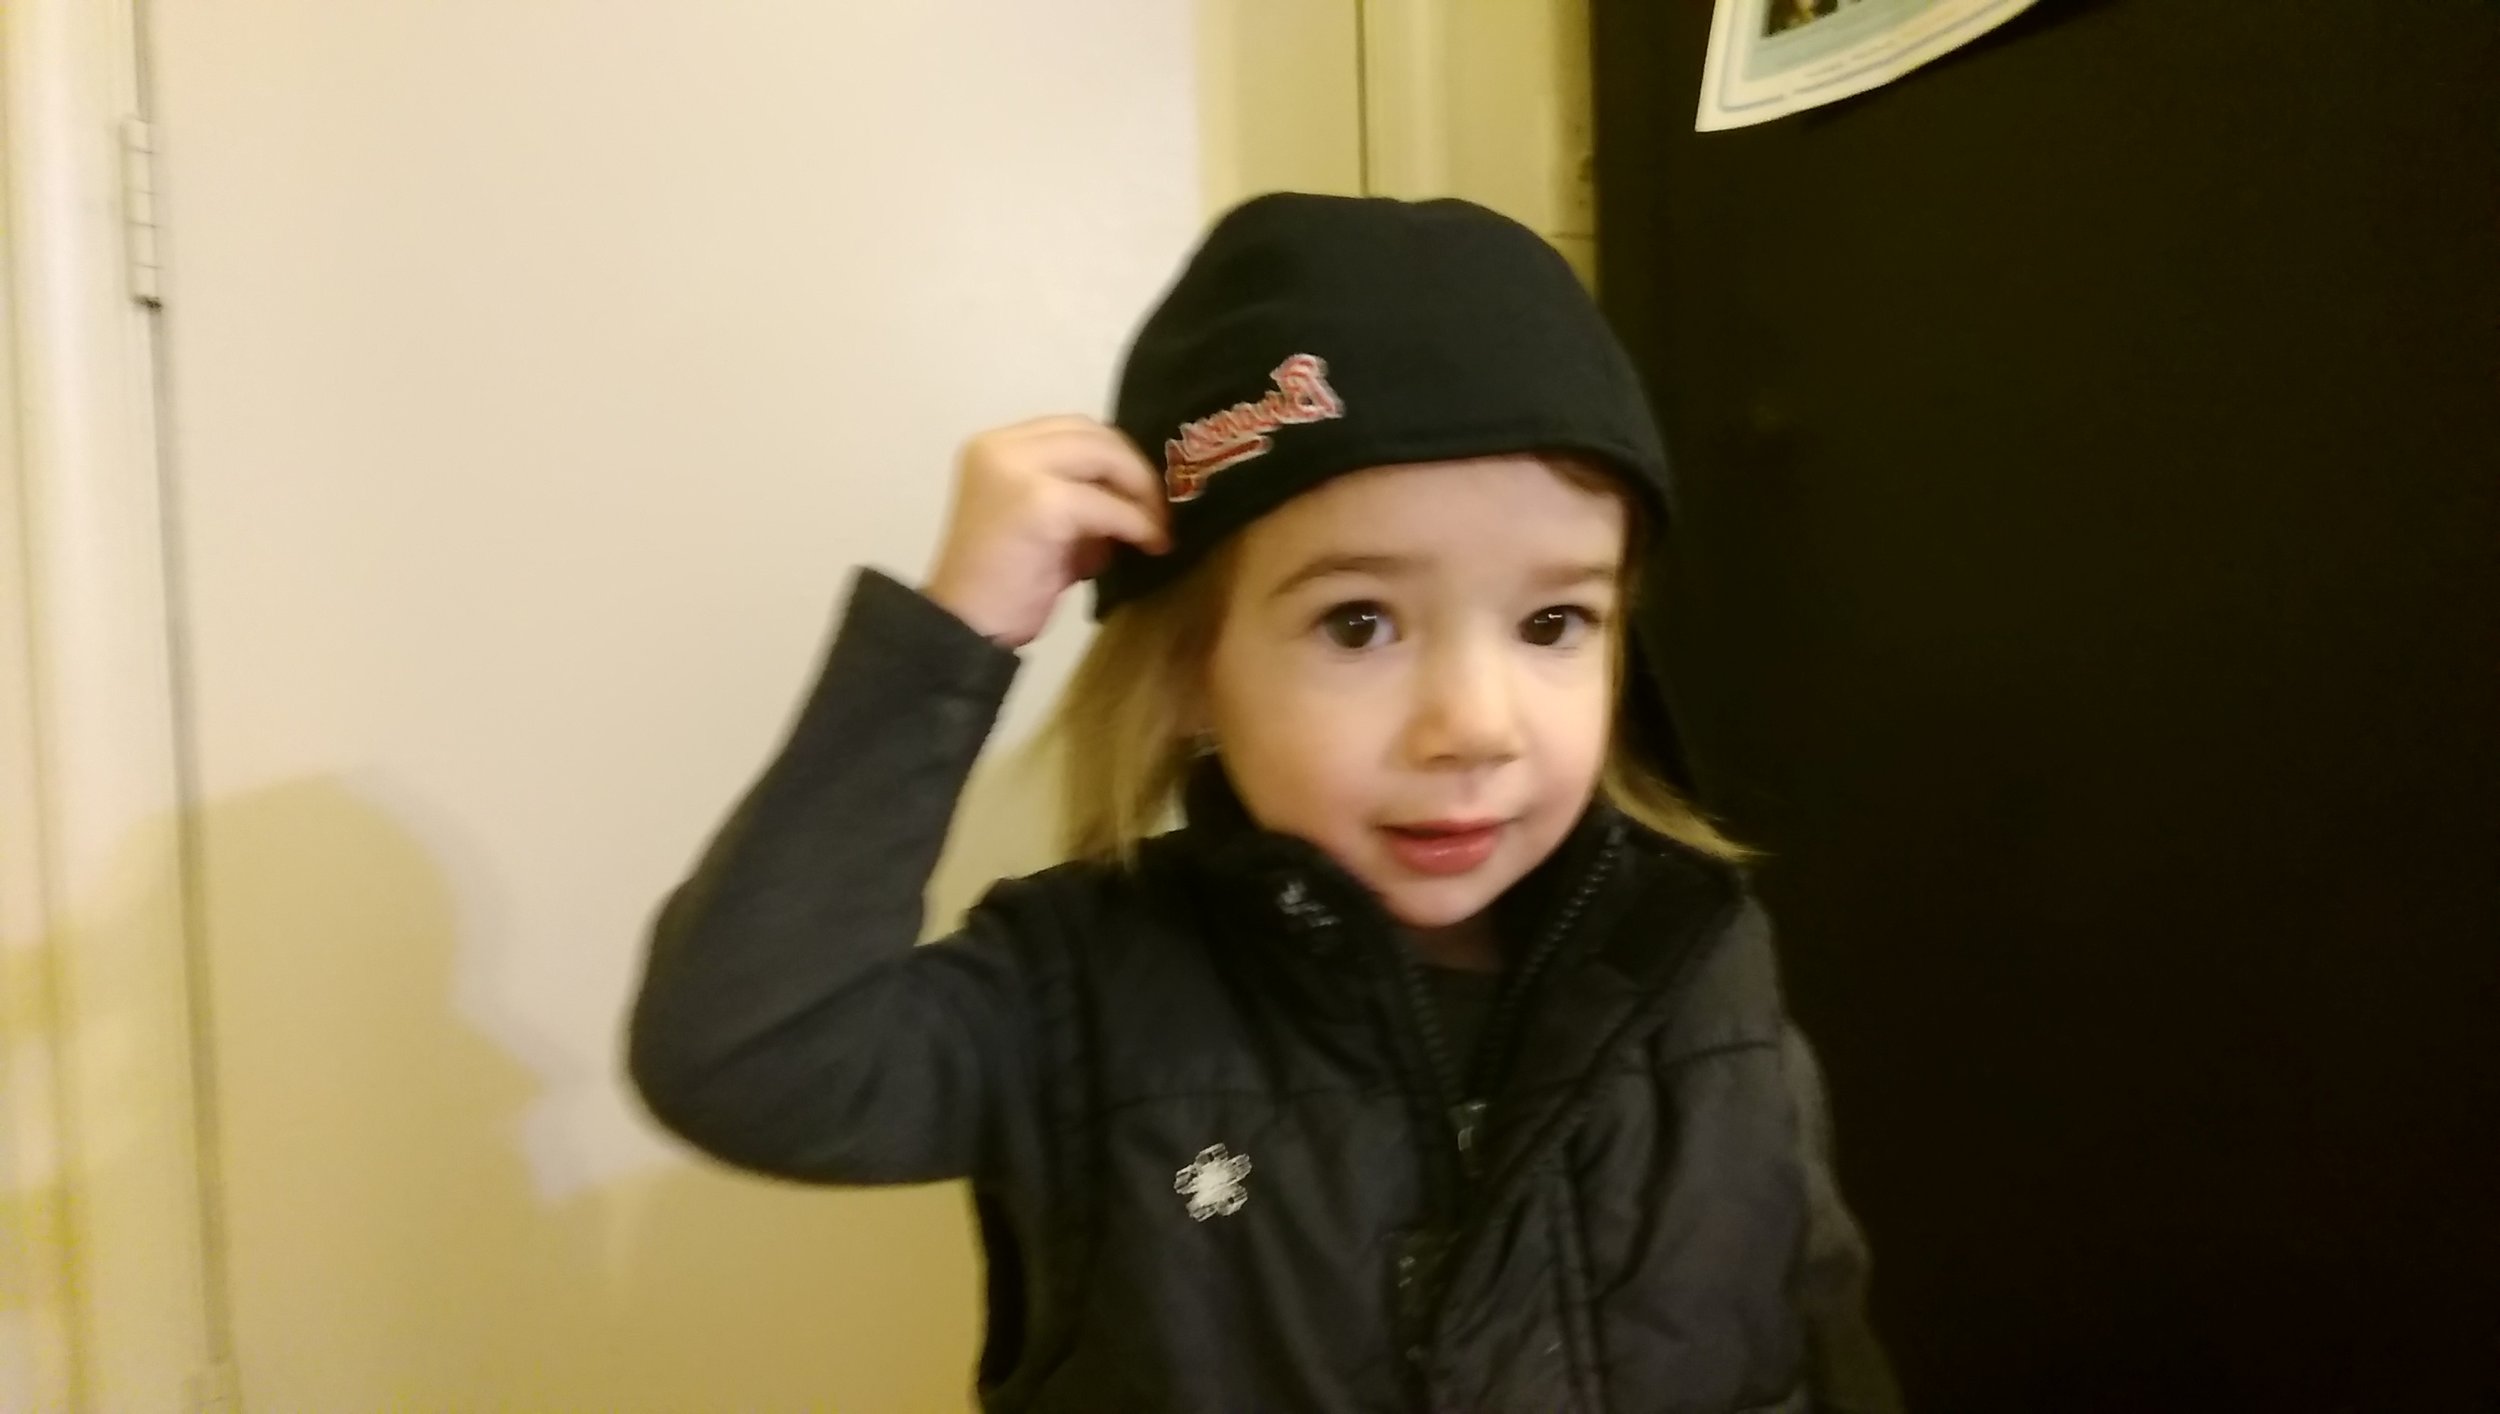 Cool kid in a baseball hat